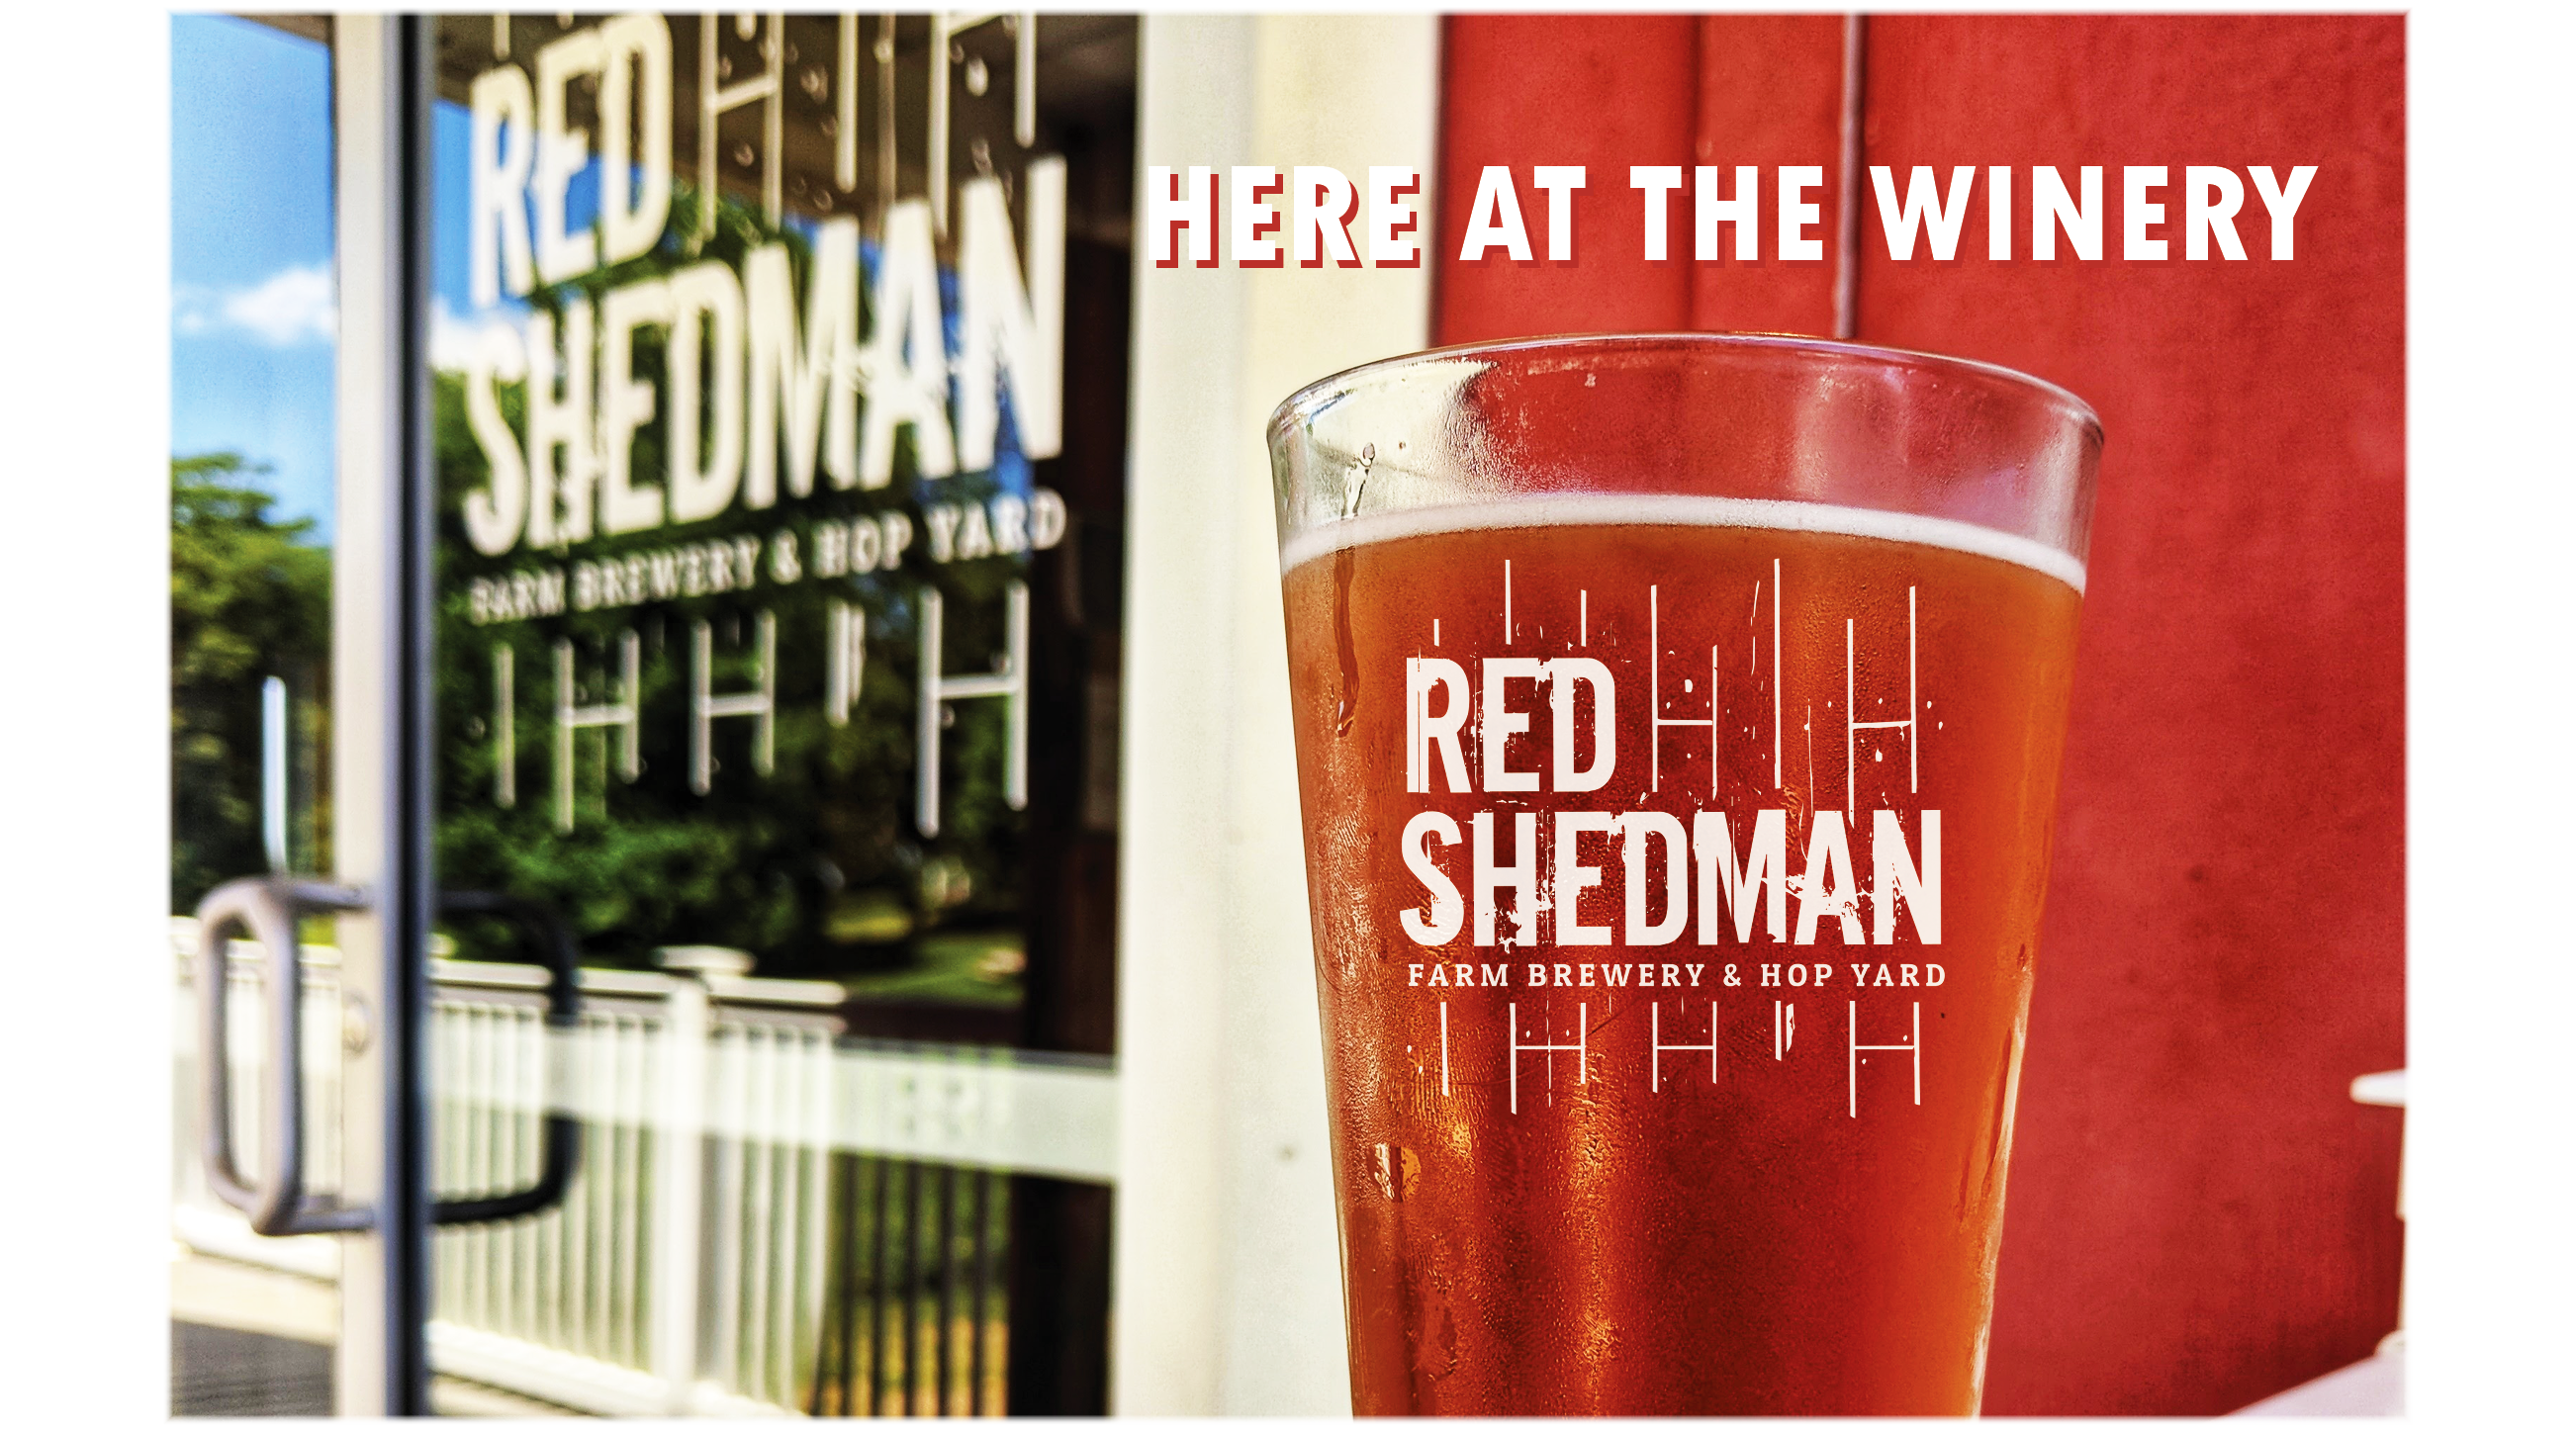 Visit Red Shedman Farm Brewerys website